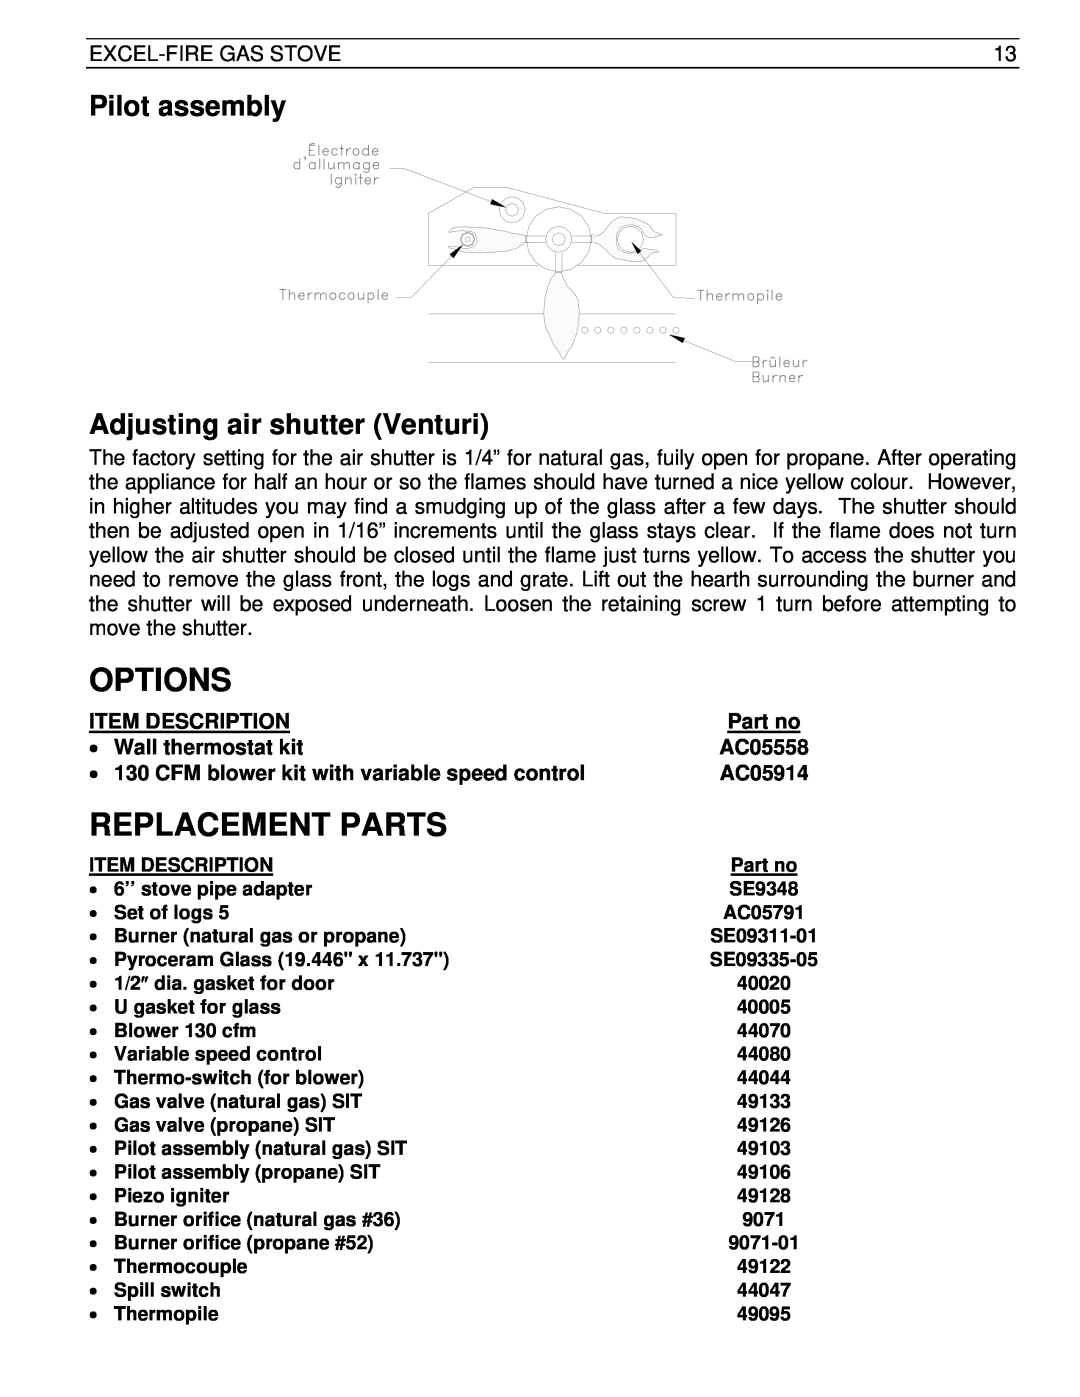 Drolet SIT 0.820.634 Nova manual Options, Replacement Parts, Pilot assembly Adjusting air shutter Venturi 